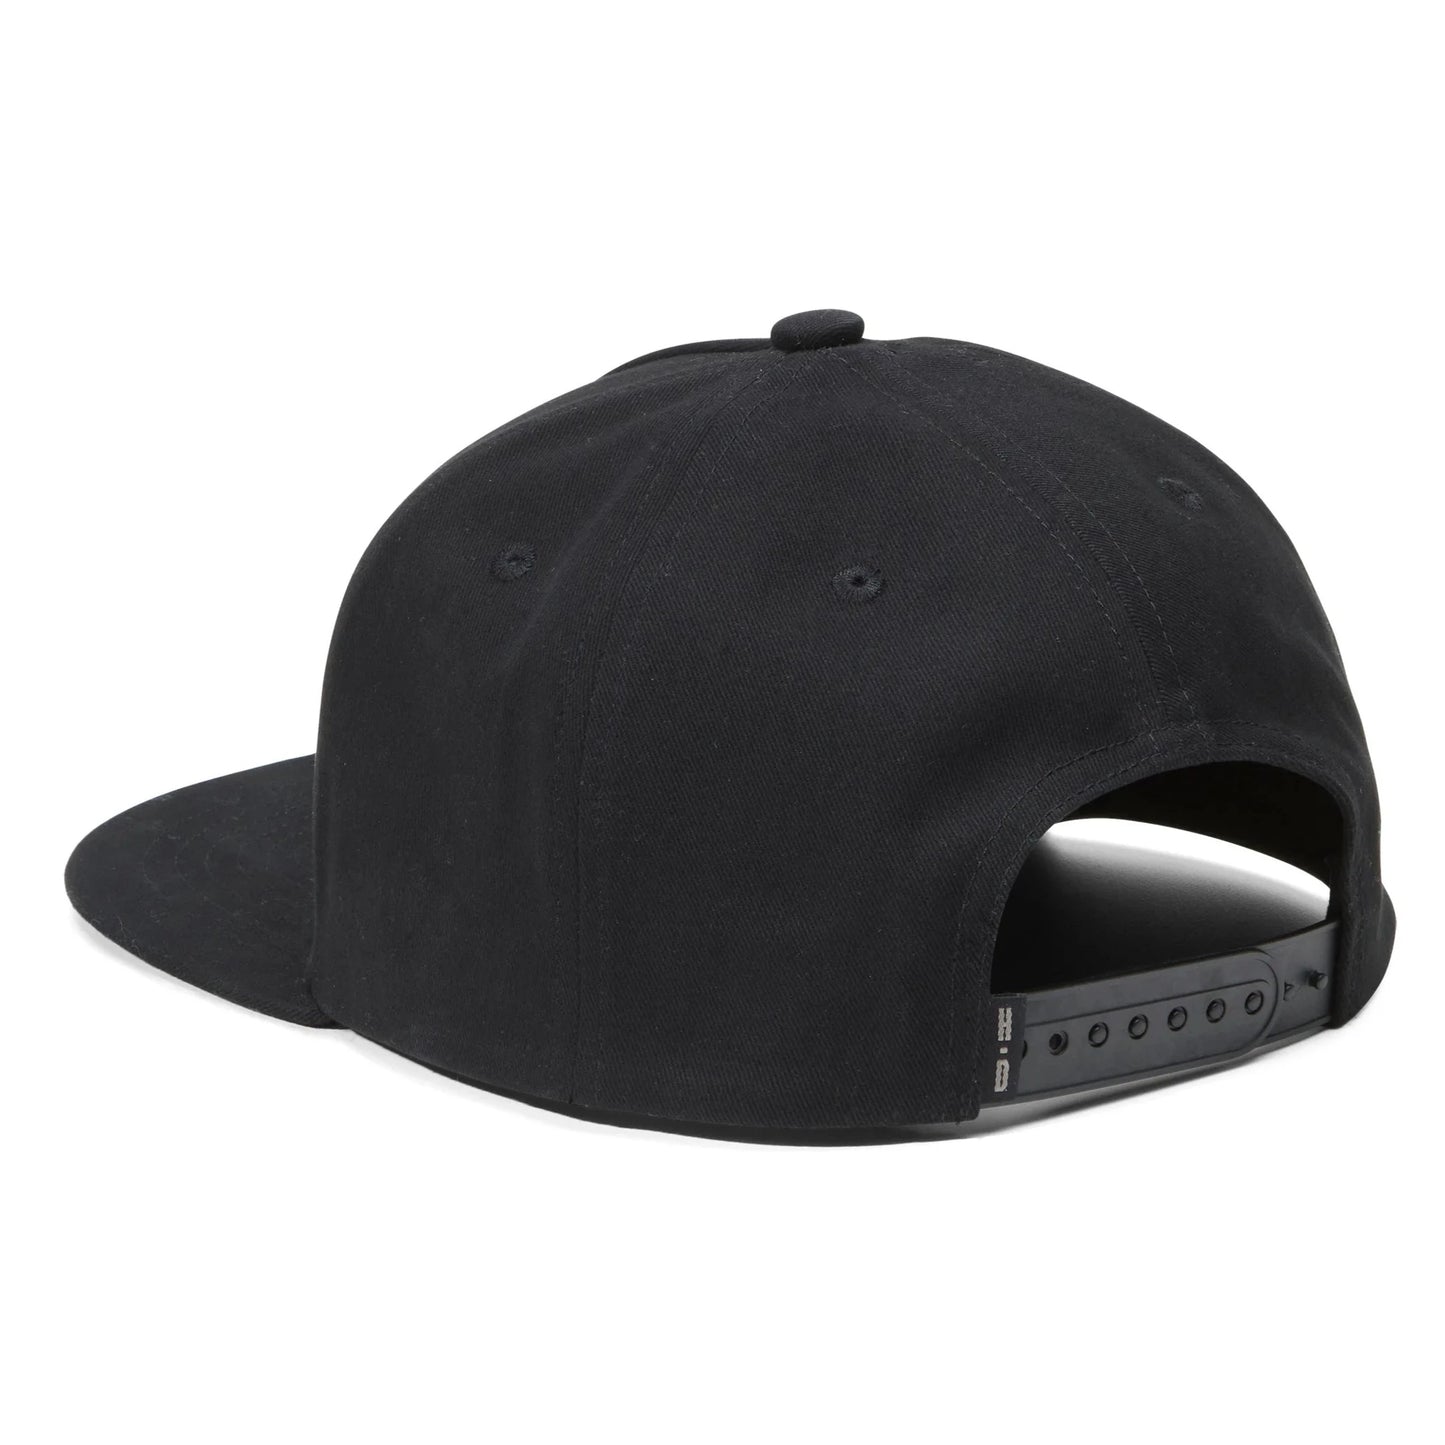 Harley-Davidson Men's Snapback Cap/Hat, Black, 97624-23VM (back)